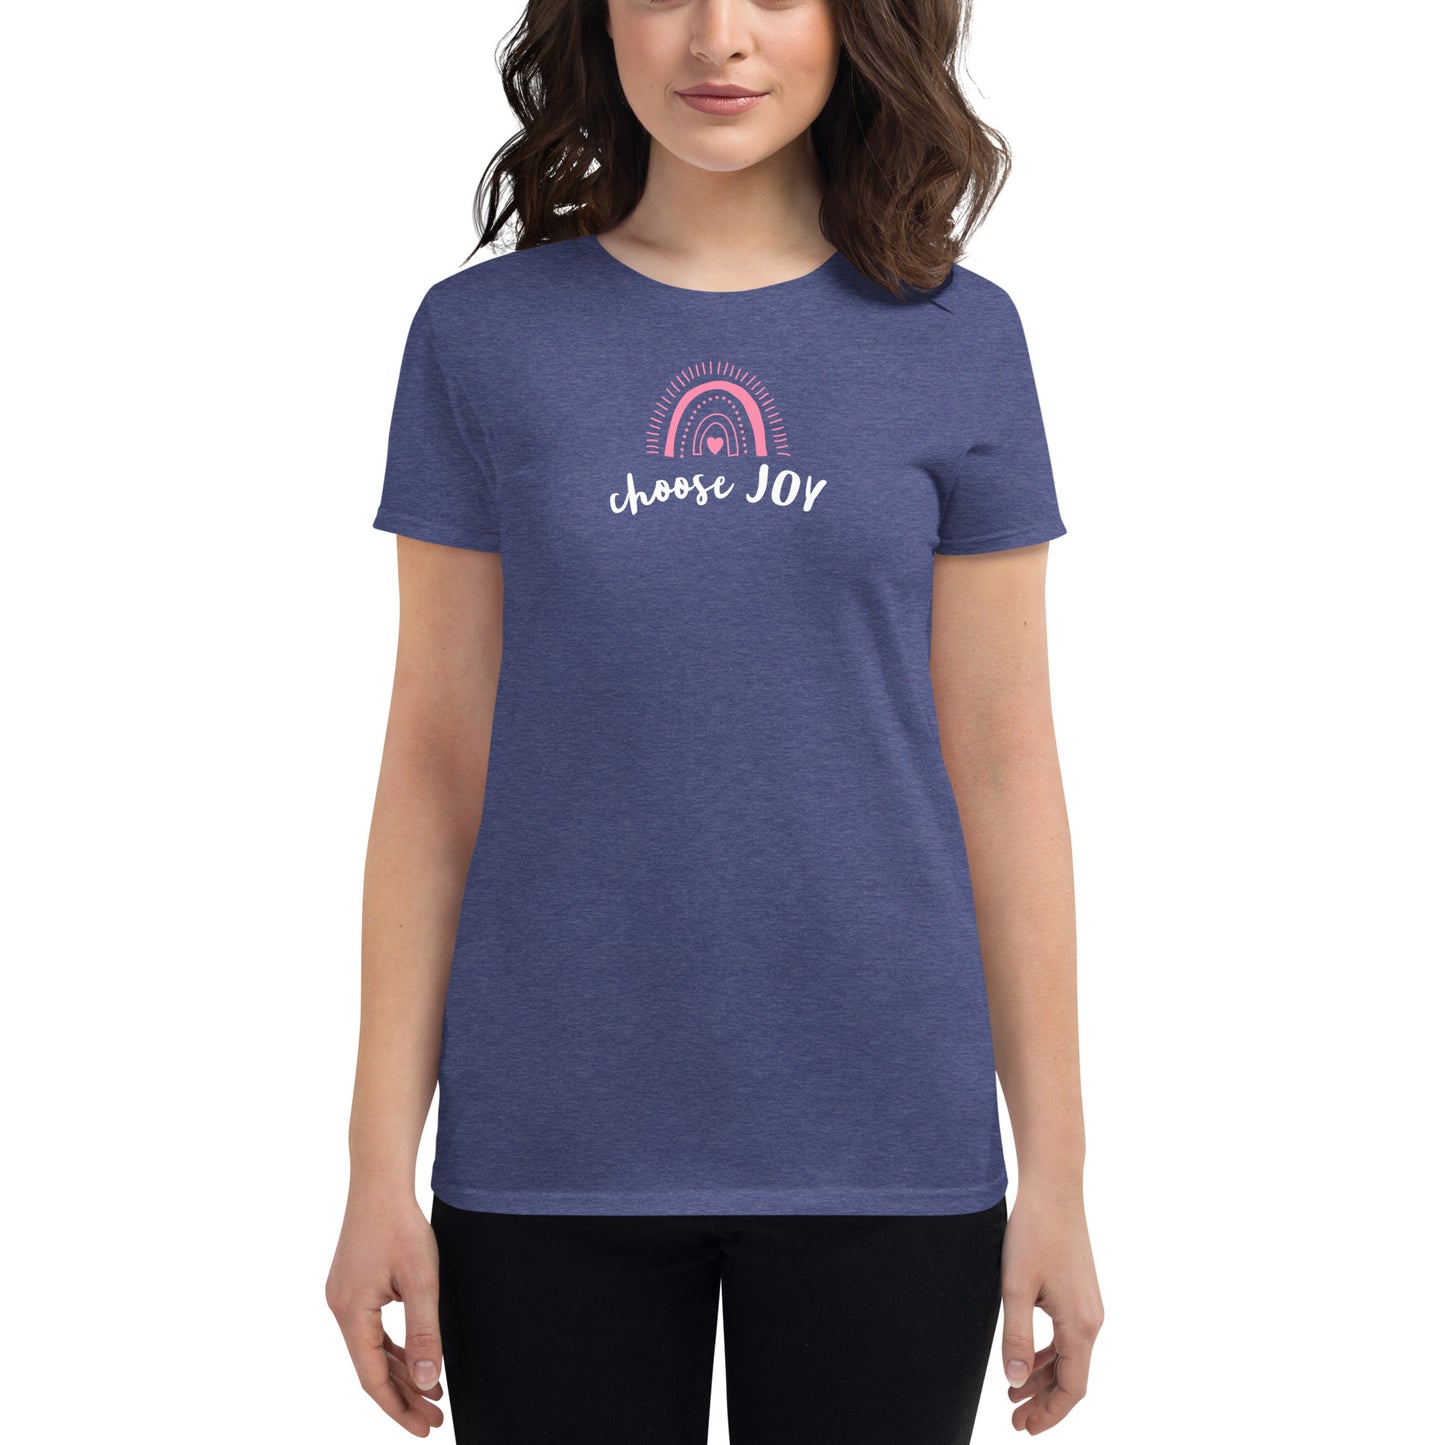 Choose Joy (pink rainbow) women's short sleeve t-shirt